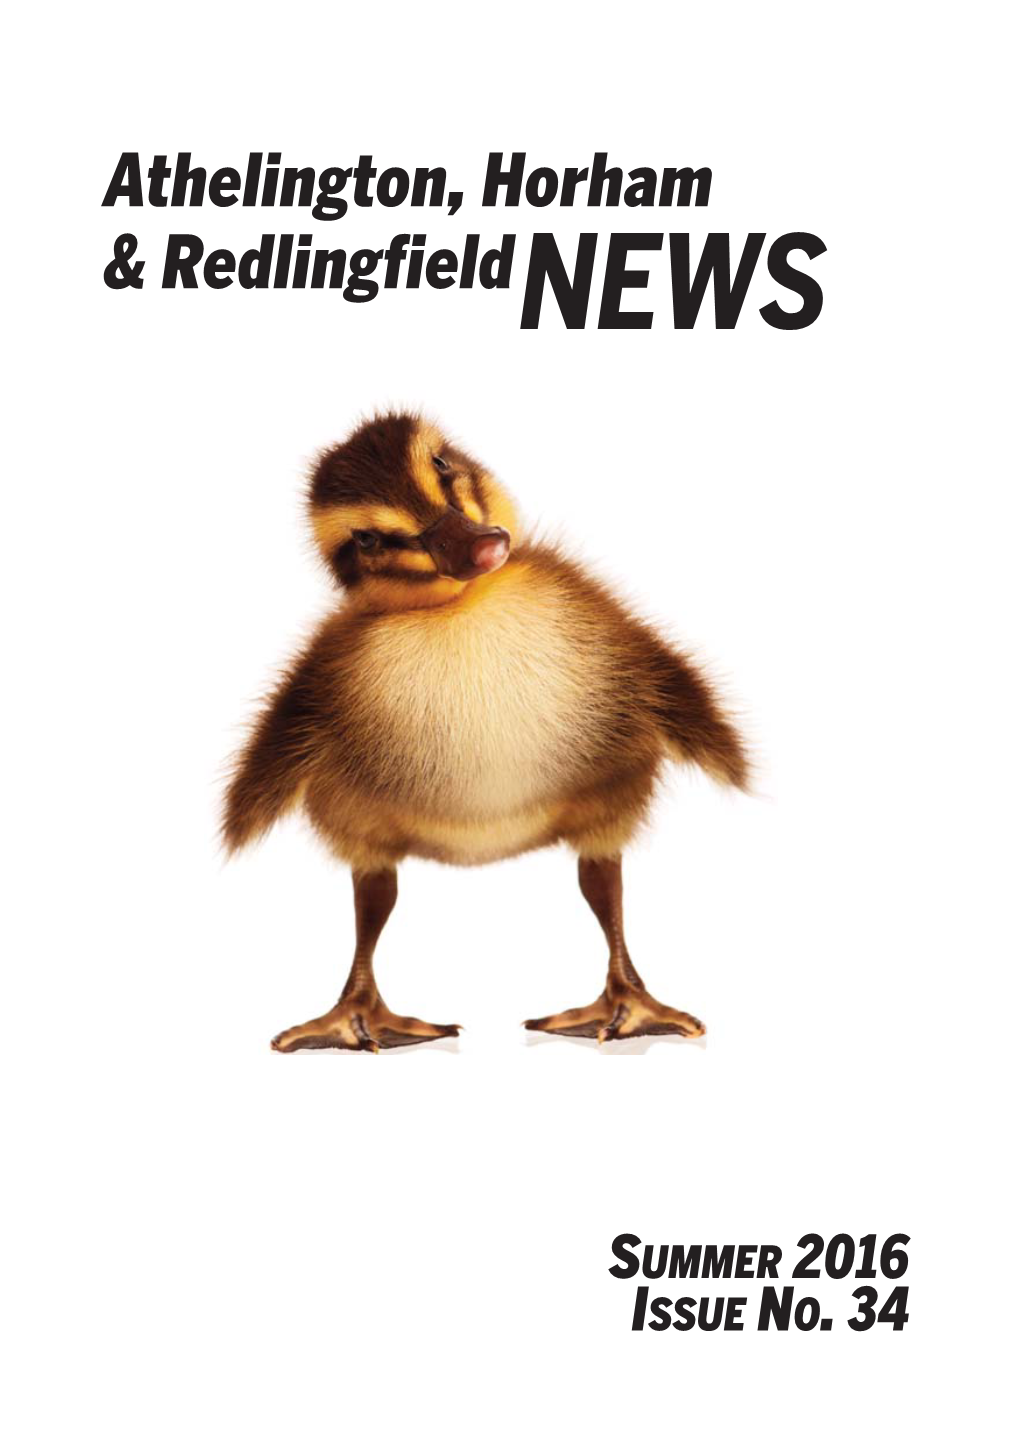 Athelington Horham & Redlingfield News Summer 2016 No 34